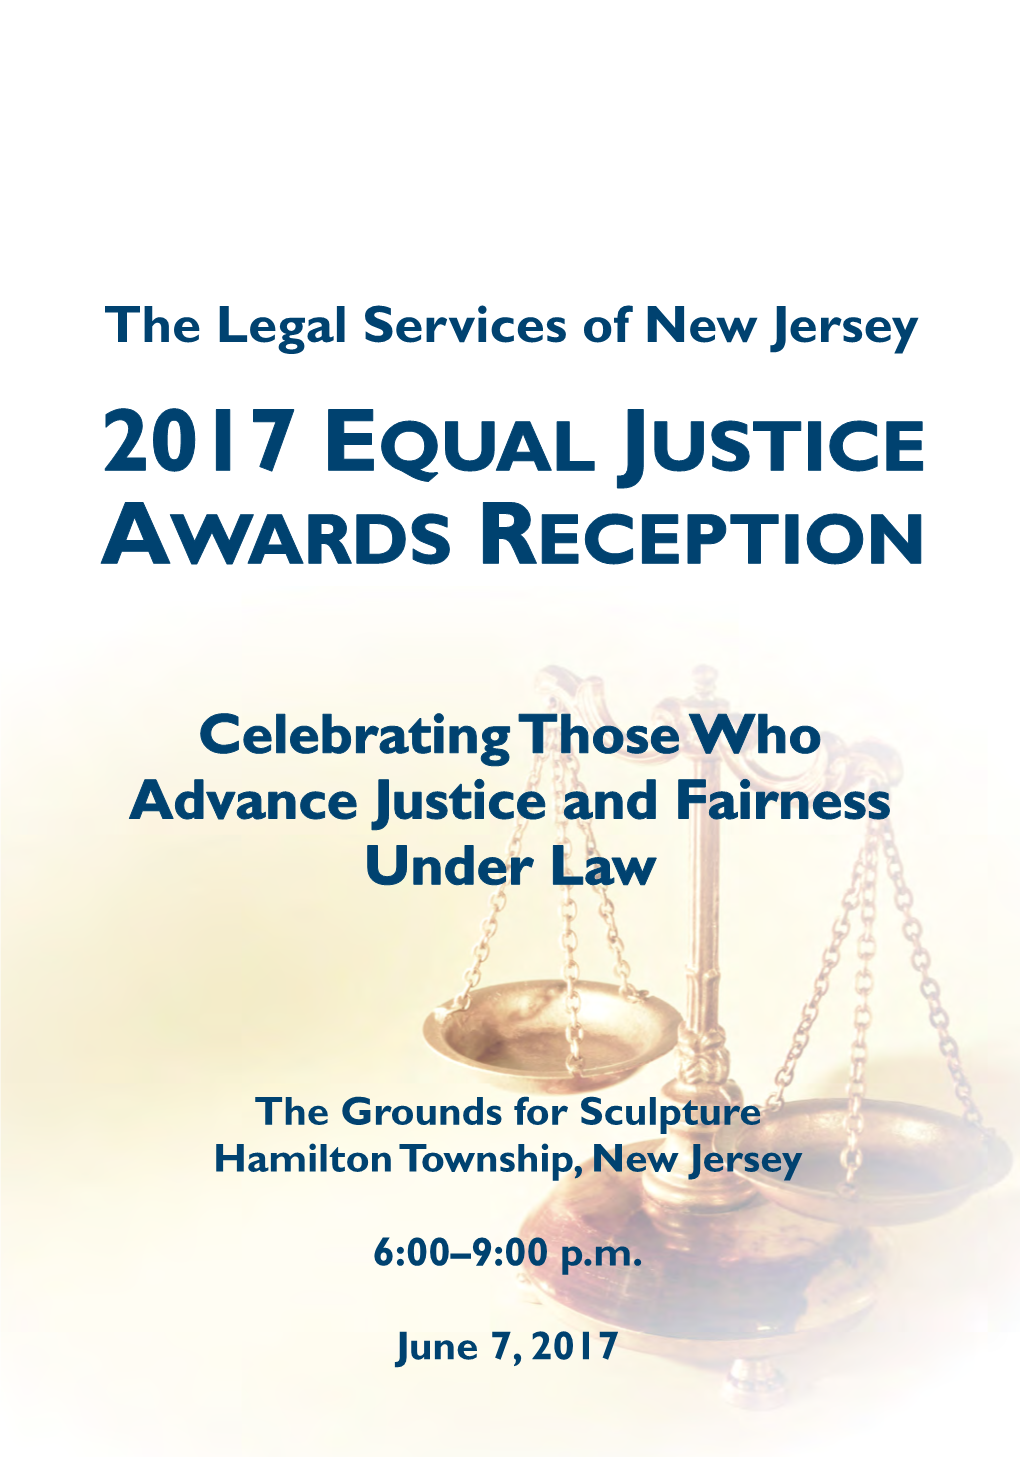 Equal Justice Awards Reception 2017 Program